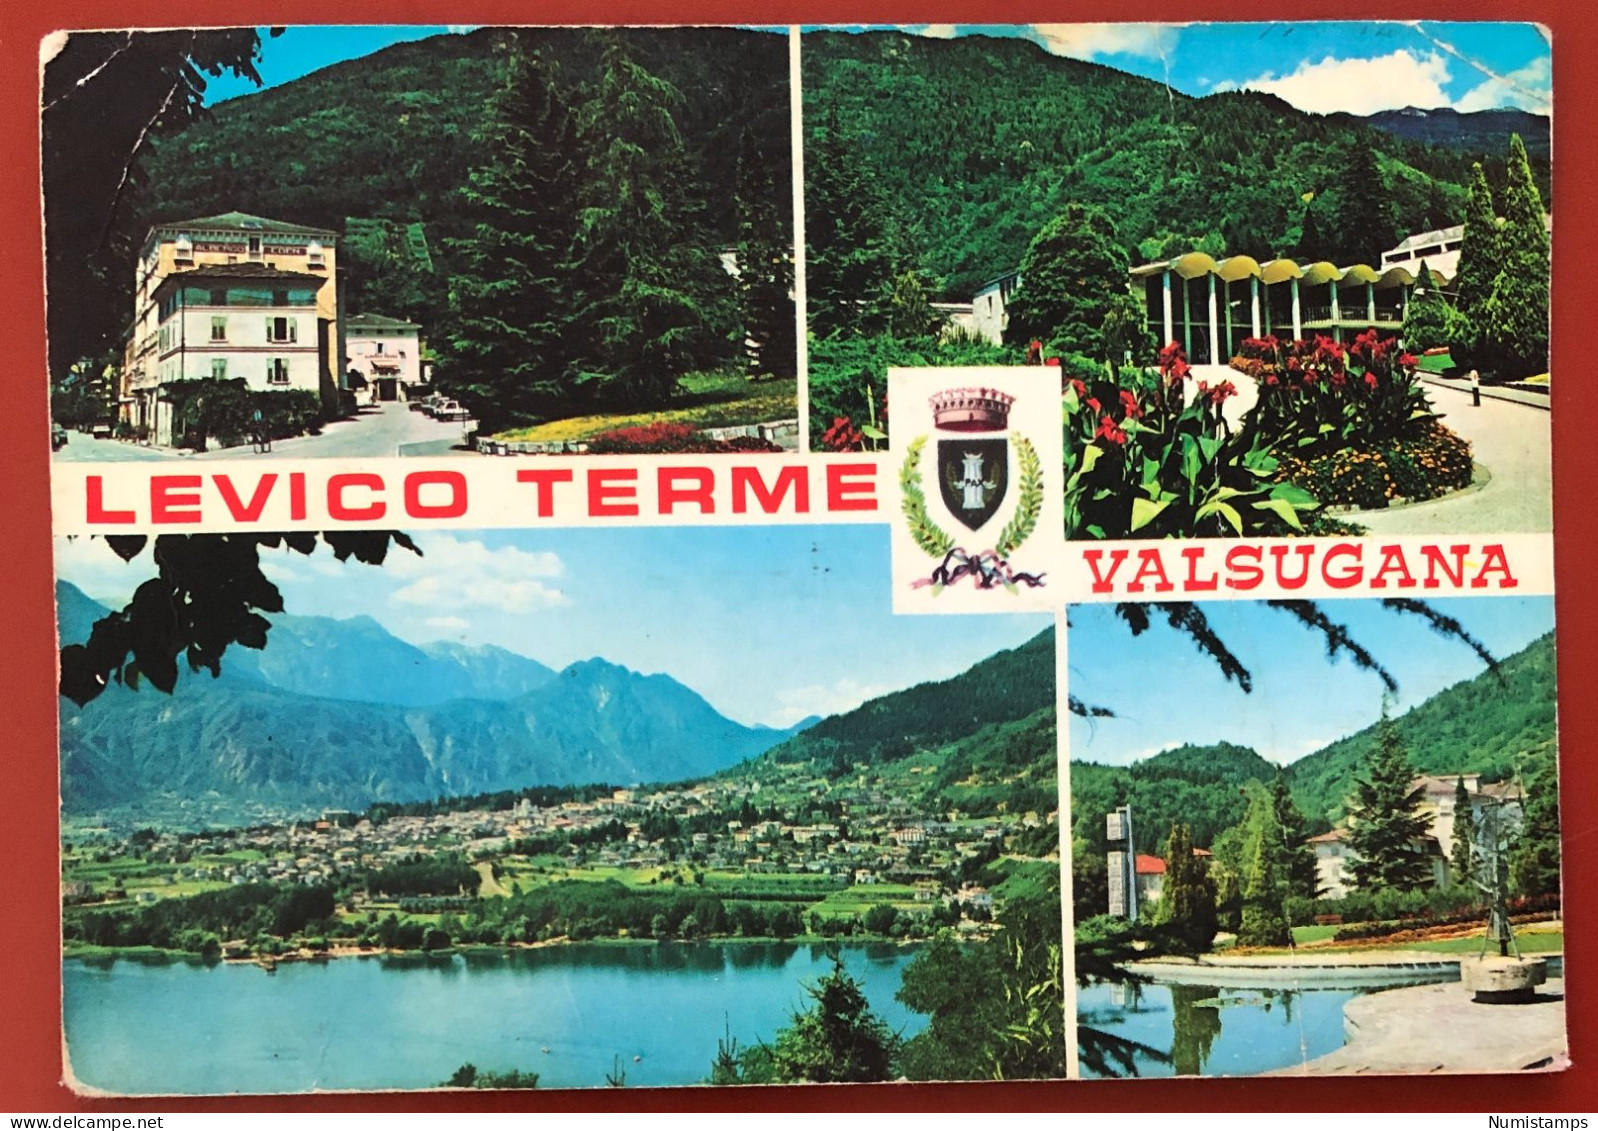 LEVICO TERME - VALSUGANA - 1985 (c816) - Trento